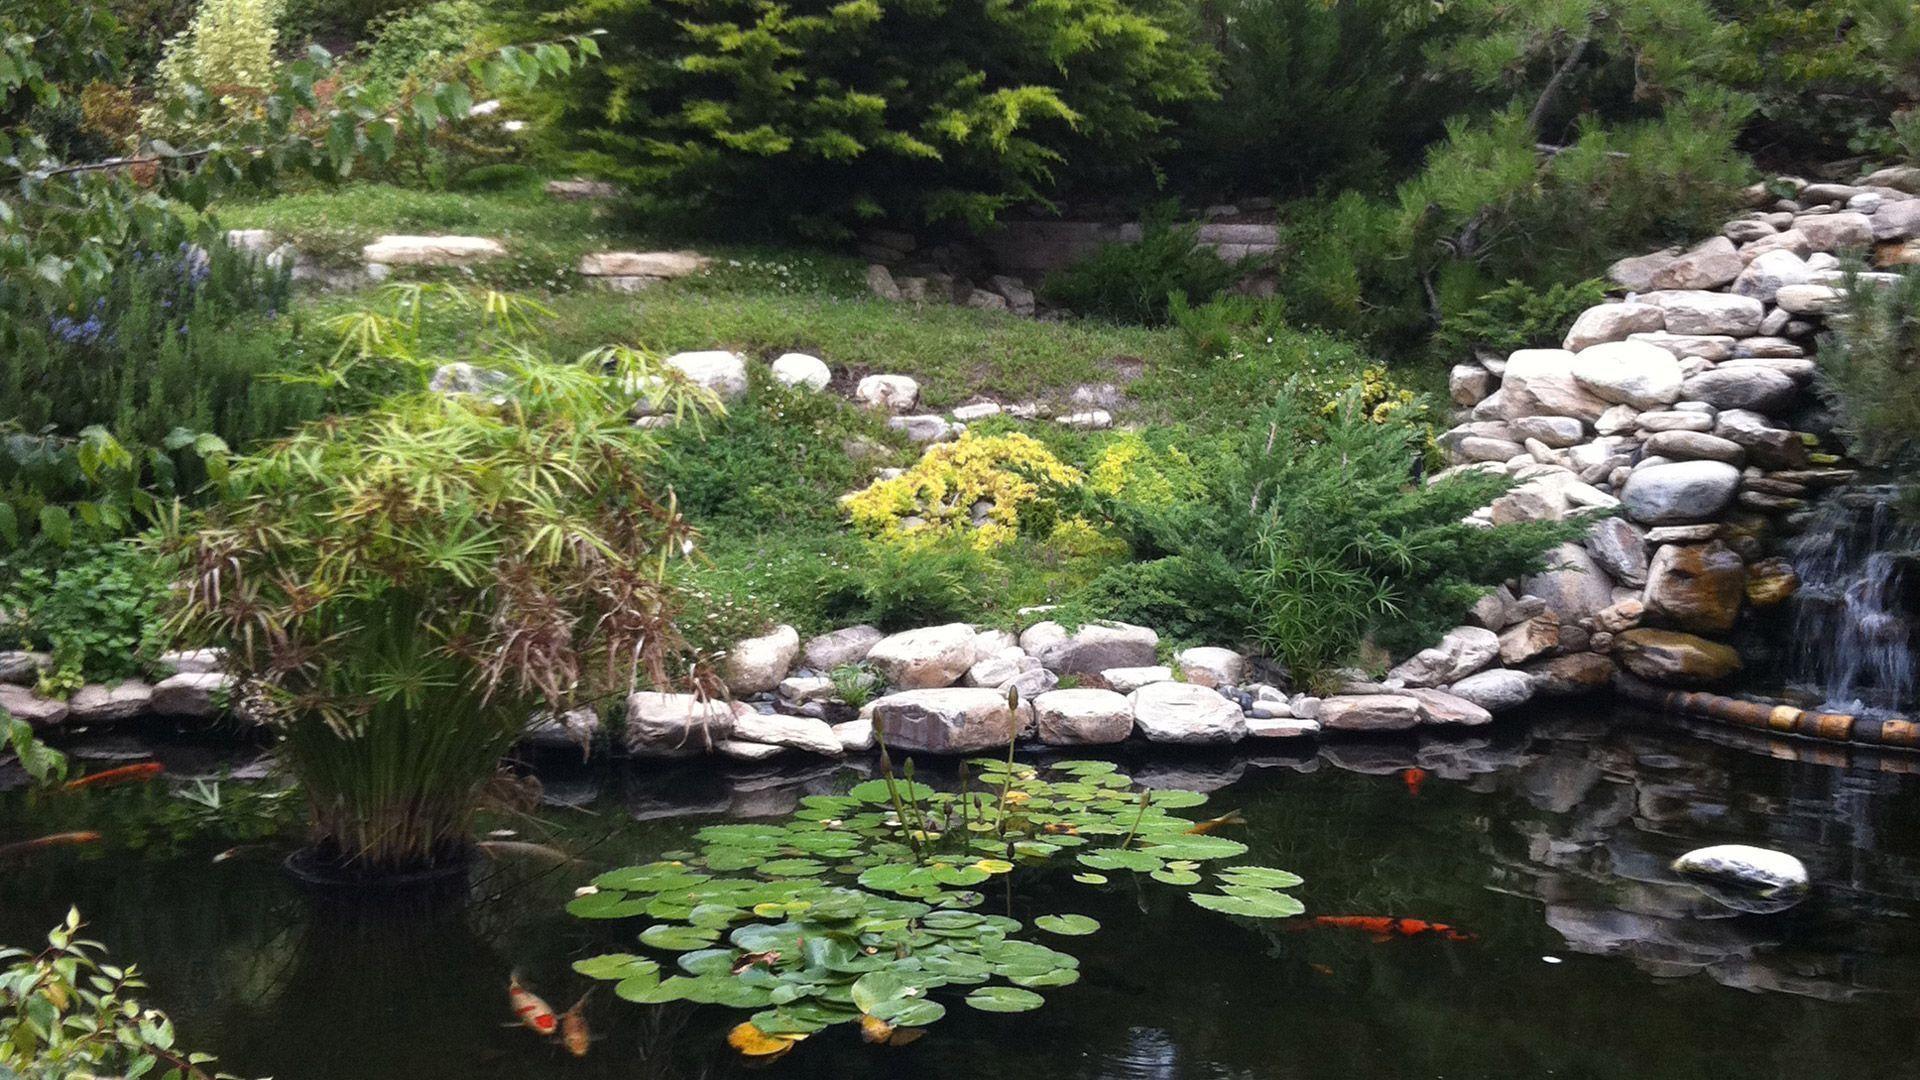 Extra Large Koi Pond Has More to Explore&;s English Gardens